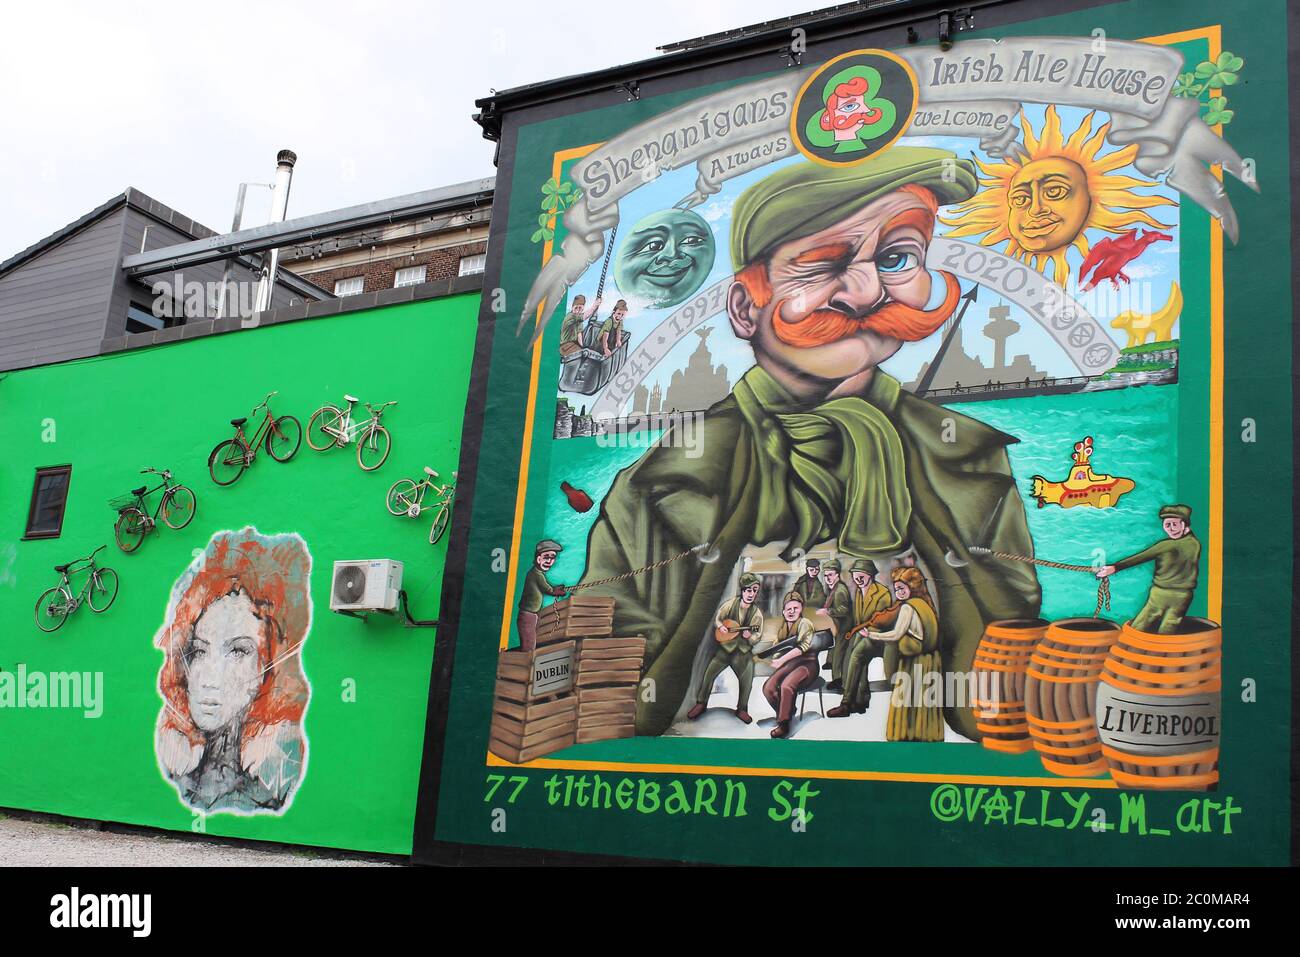 Shenanigans Irish Ale House, Tithebarn Street, Liverpool Stockfoto